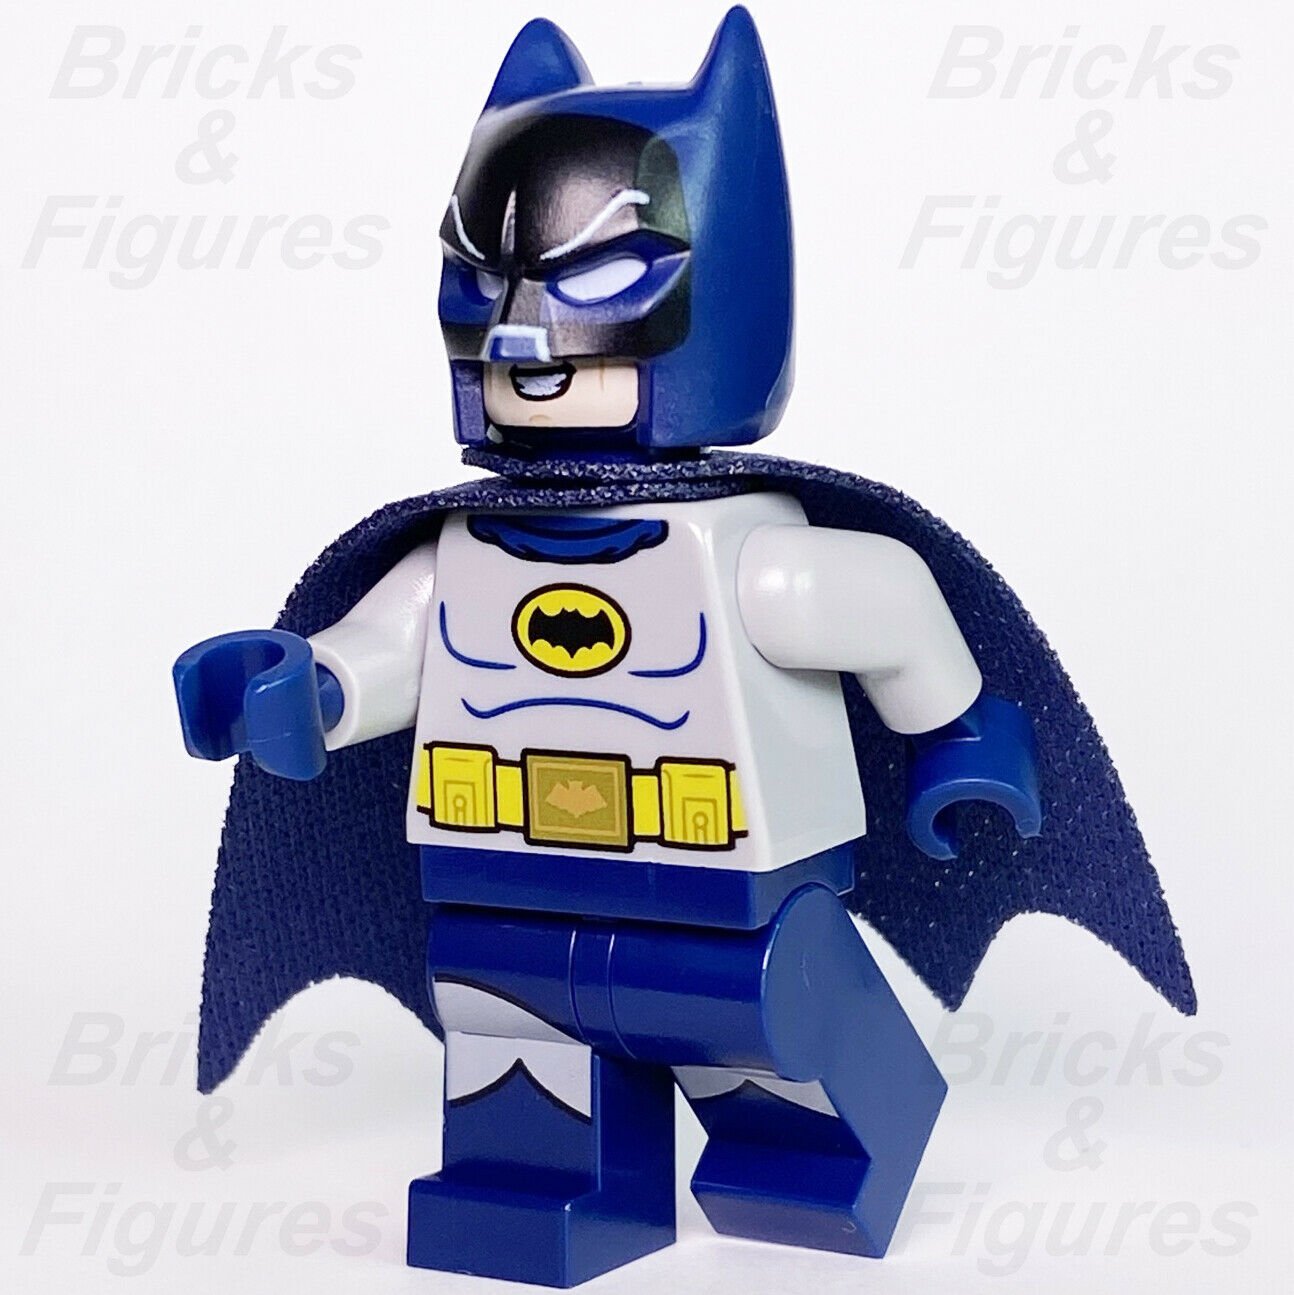 Lego Bachelor Batman 70838 The LEGO Movie 2 Minifigure